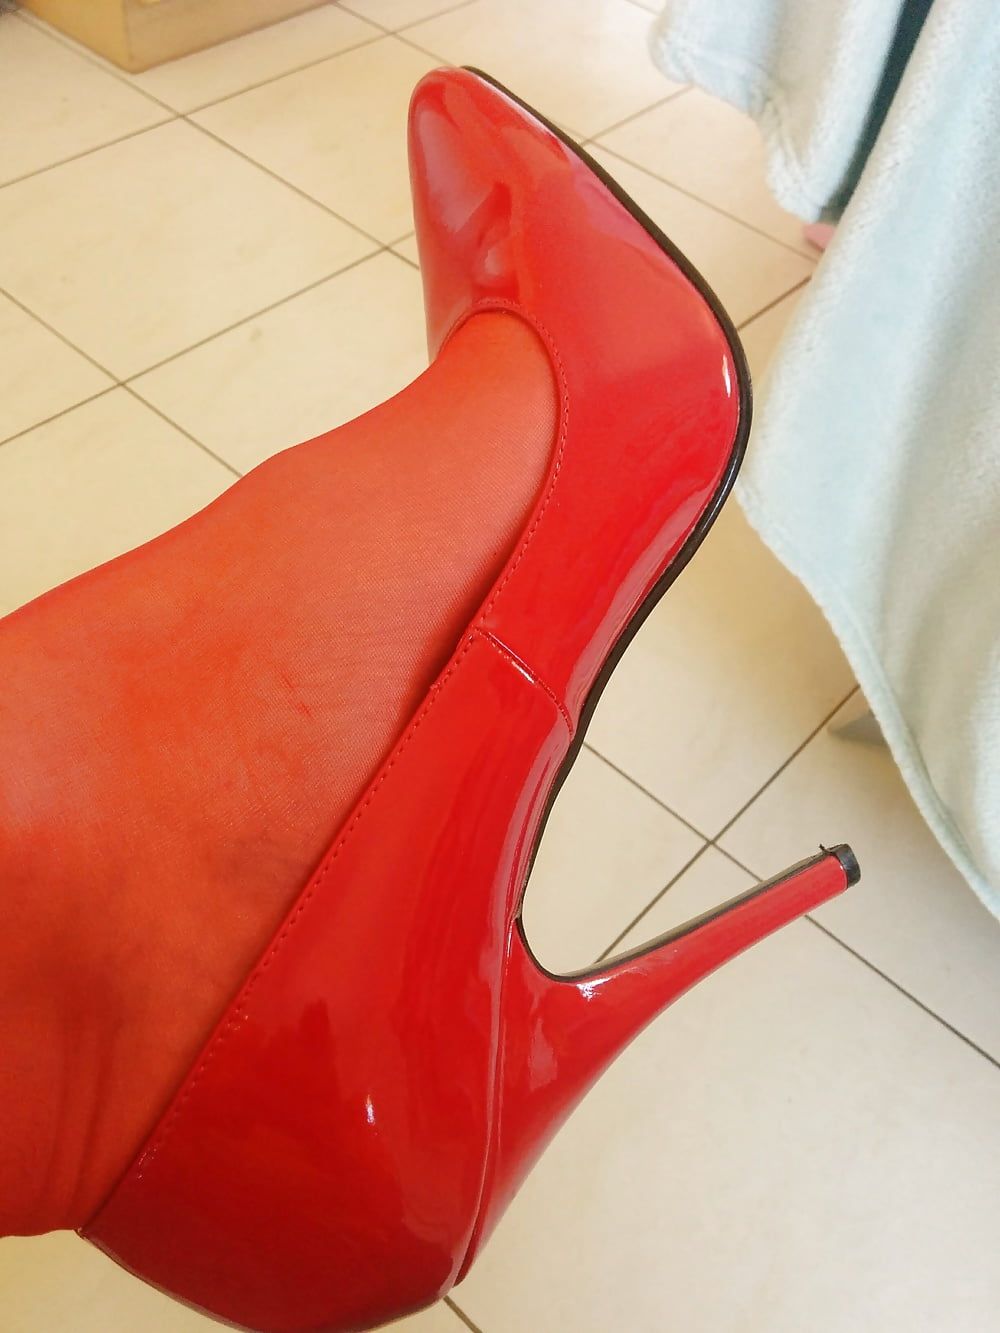 New heels: Red 6' Pump Shoe. Like?